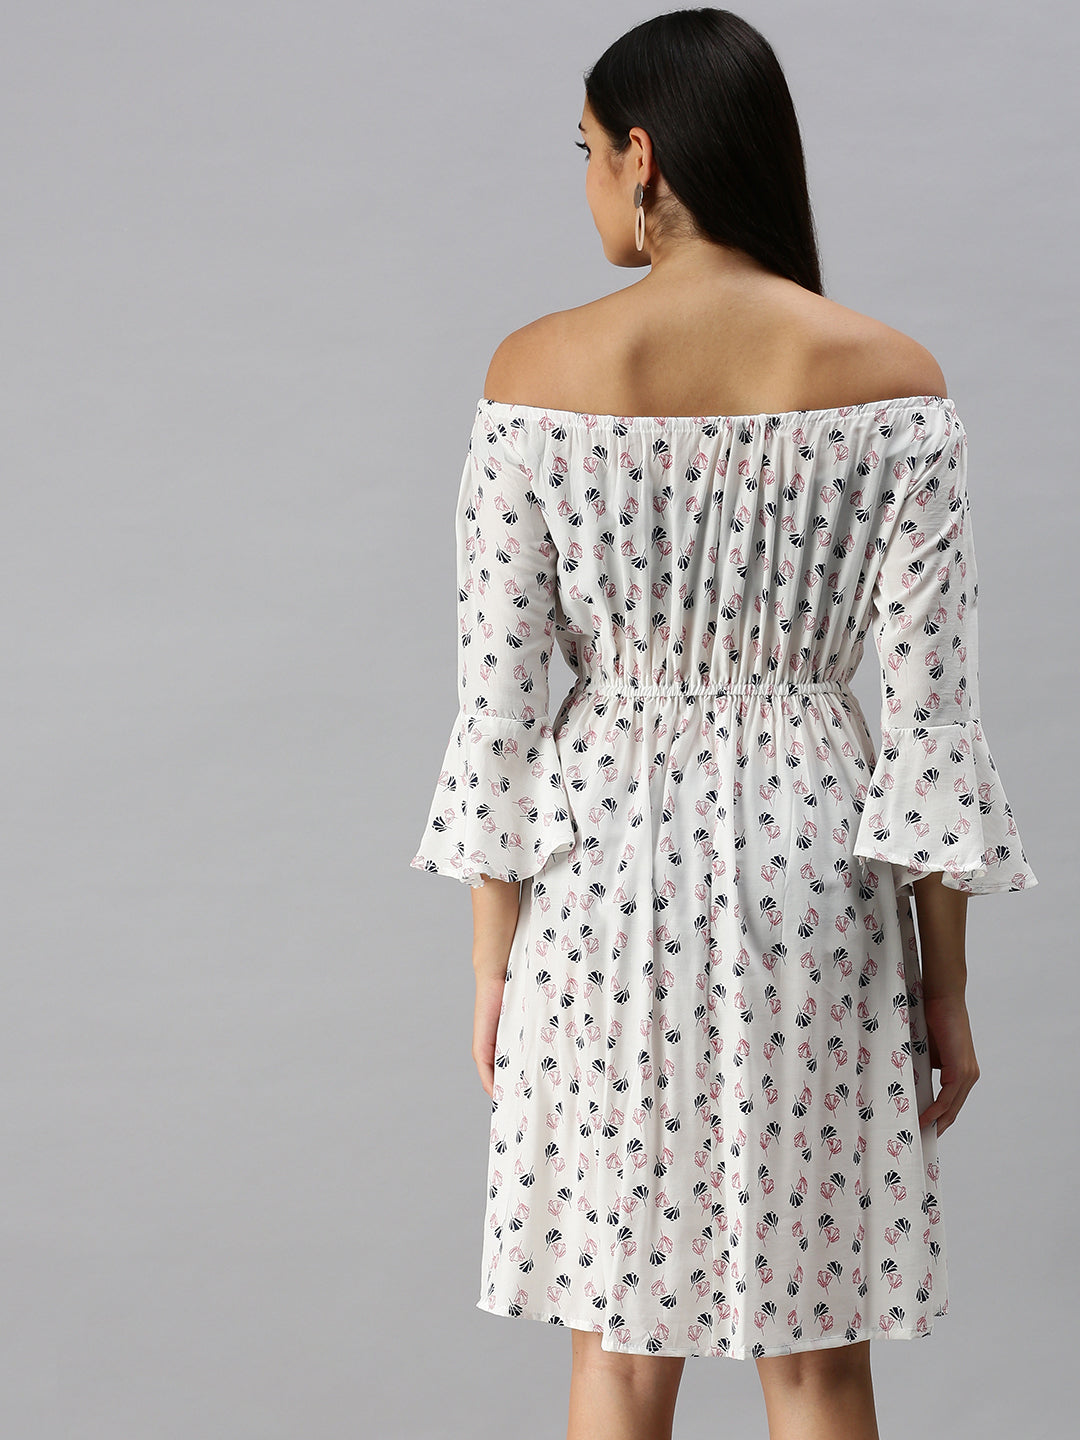 Women's A-Line White Printed Dress